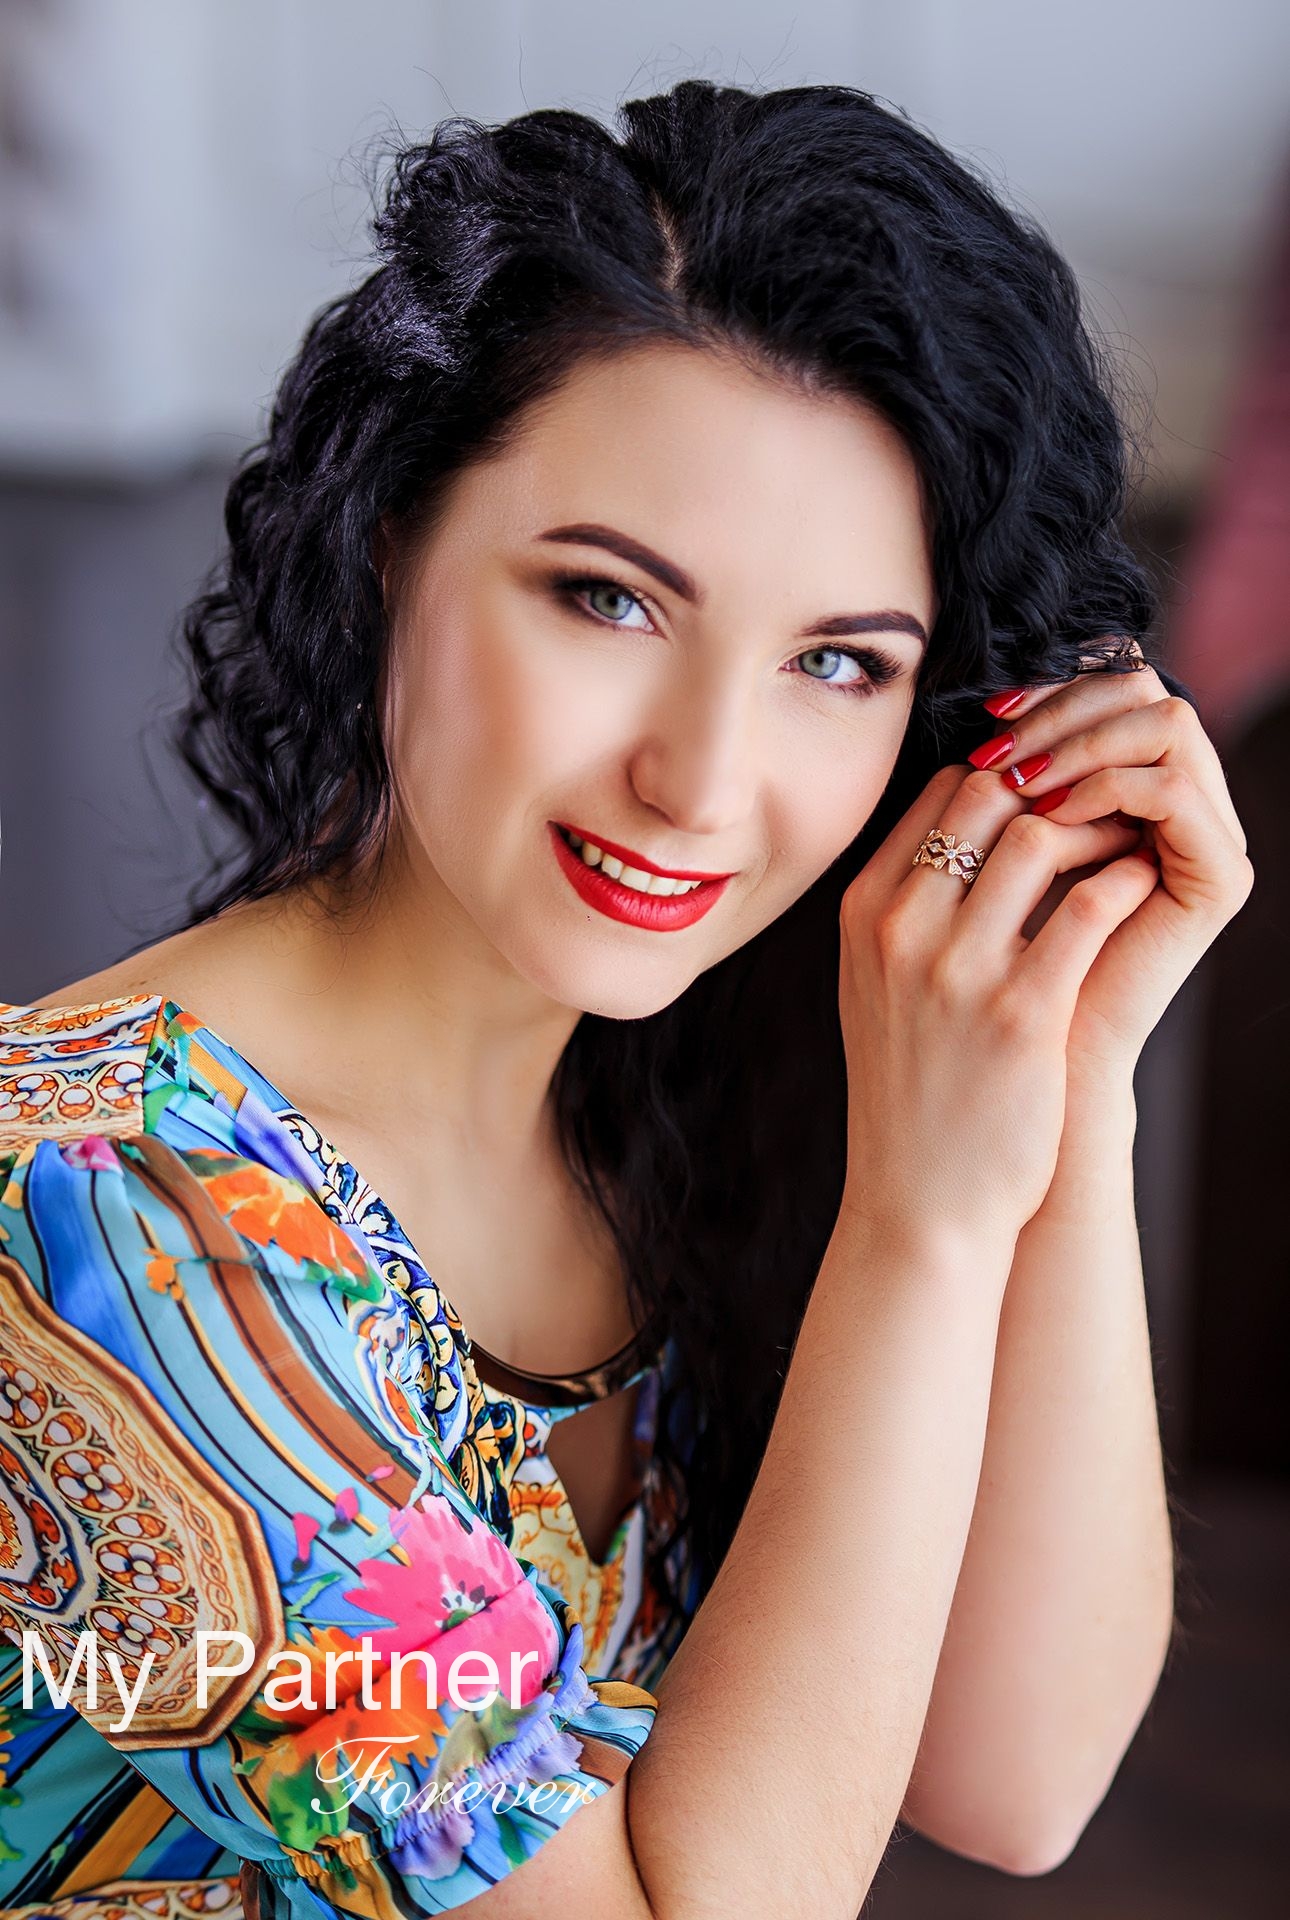 Datingsite to Meet Charming Ukrainian Woman Yuliya from Zaporozhye, Ukraine